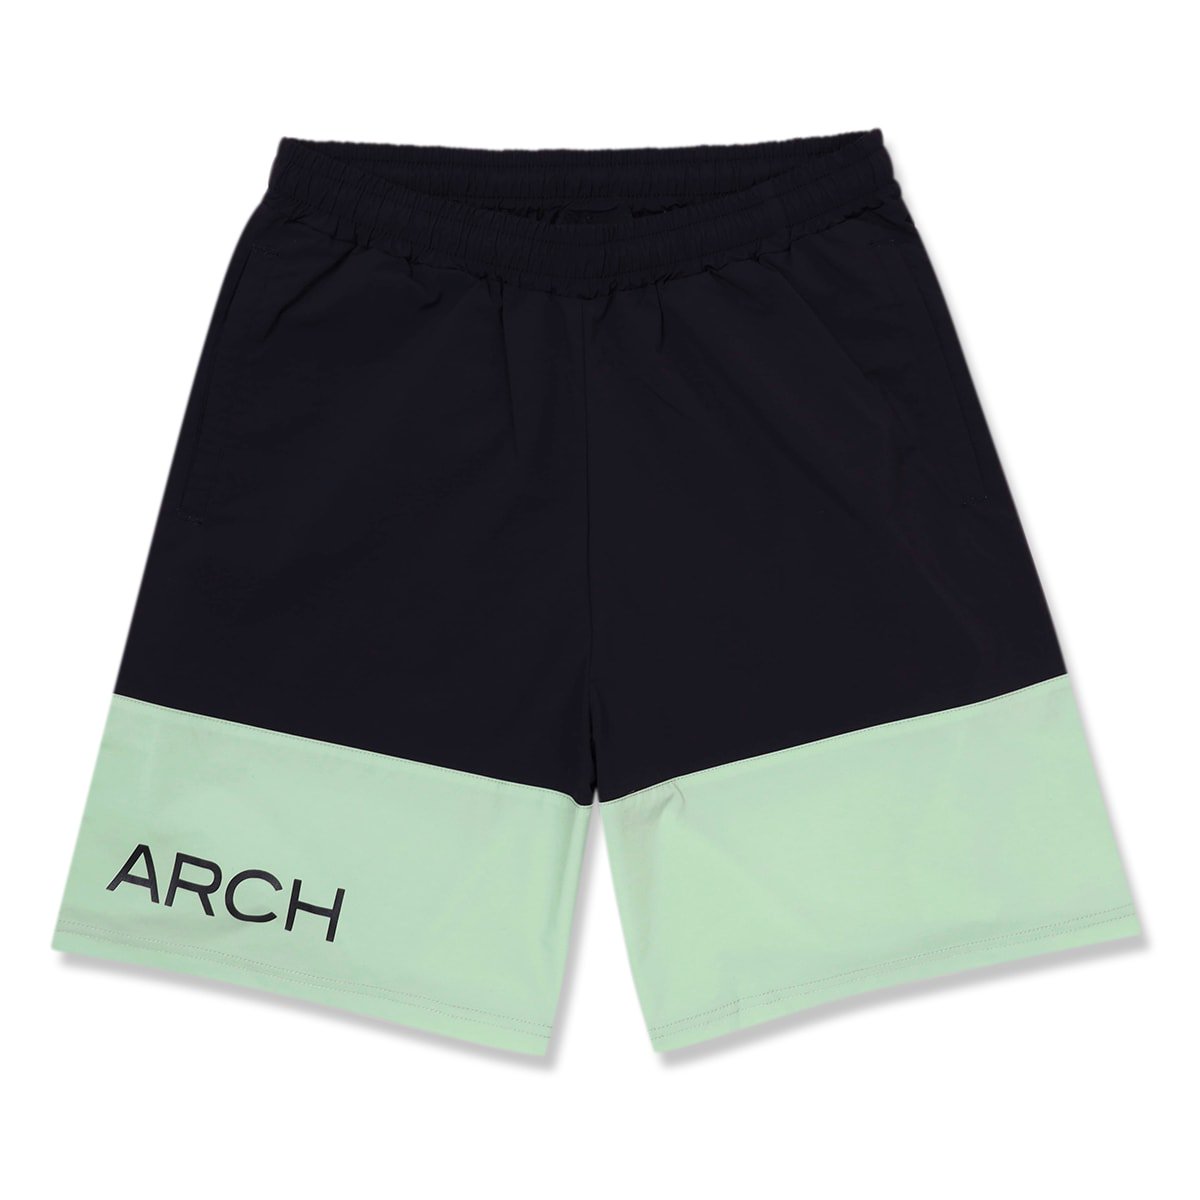 two-tone flex shorts【black/mist green】